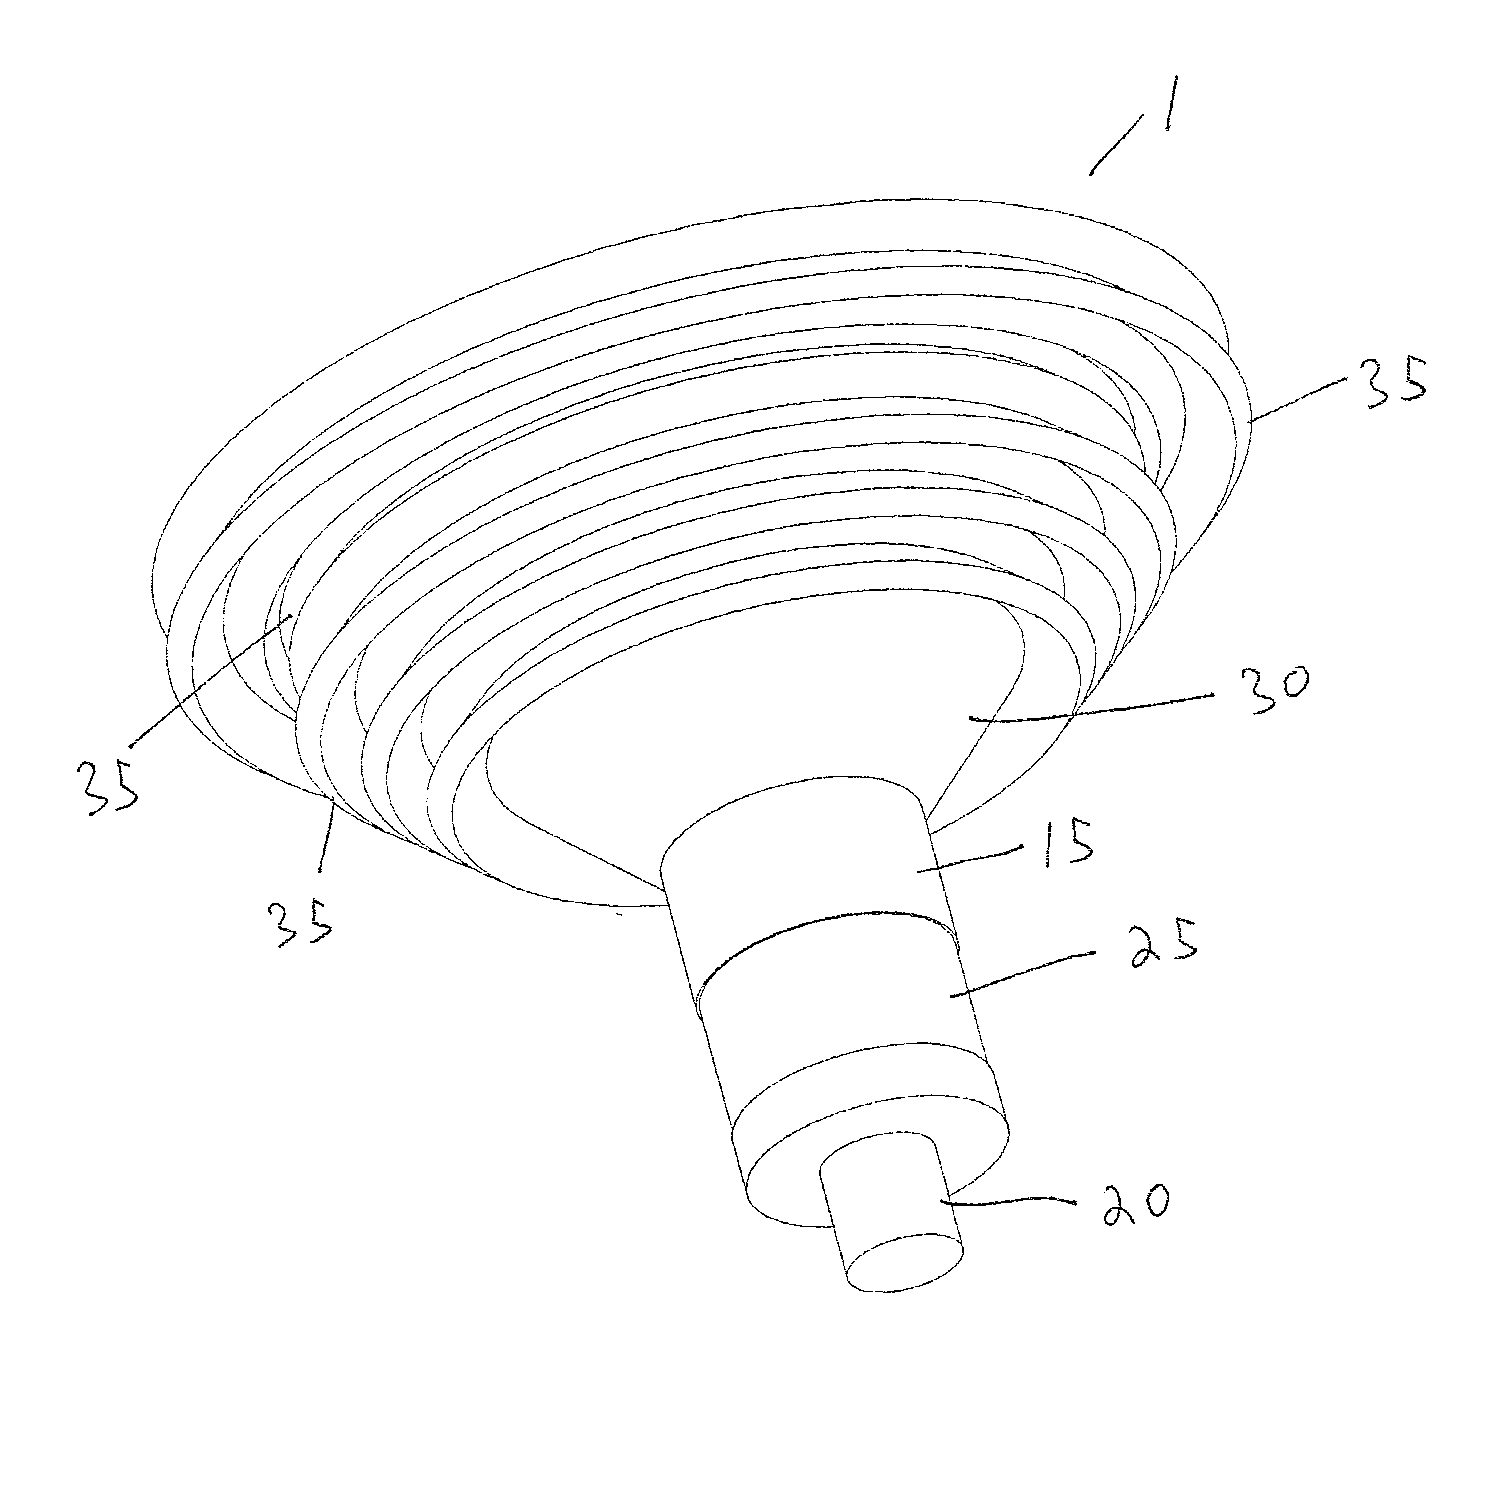 Tuned perturbation cone feed for reflector antenna